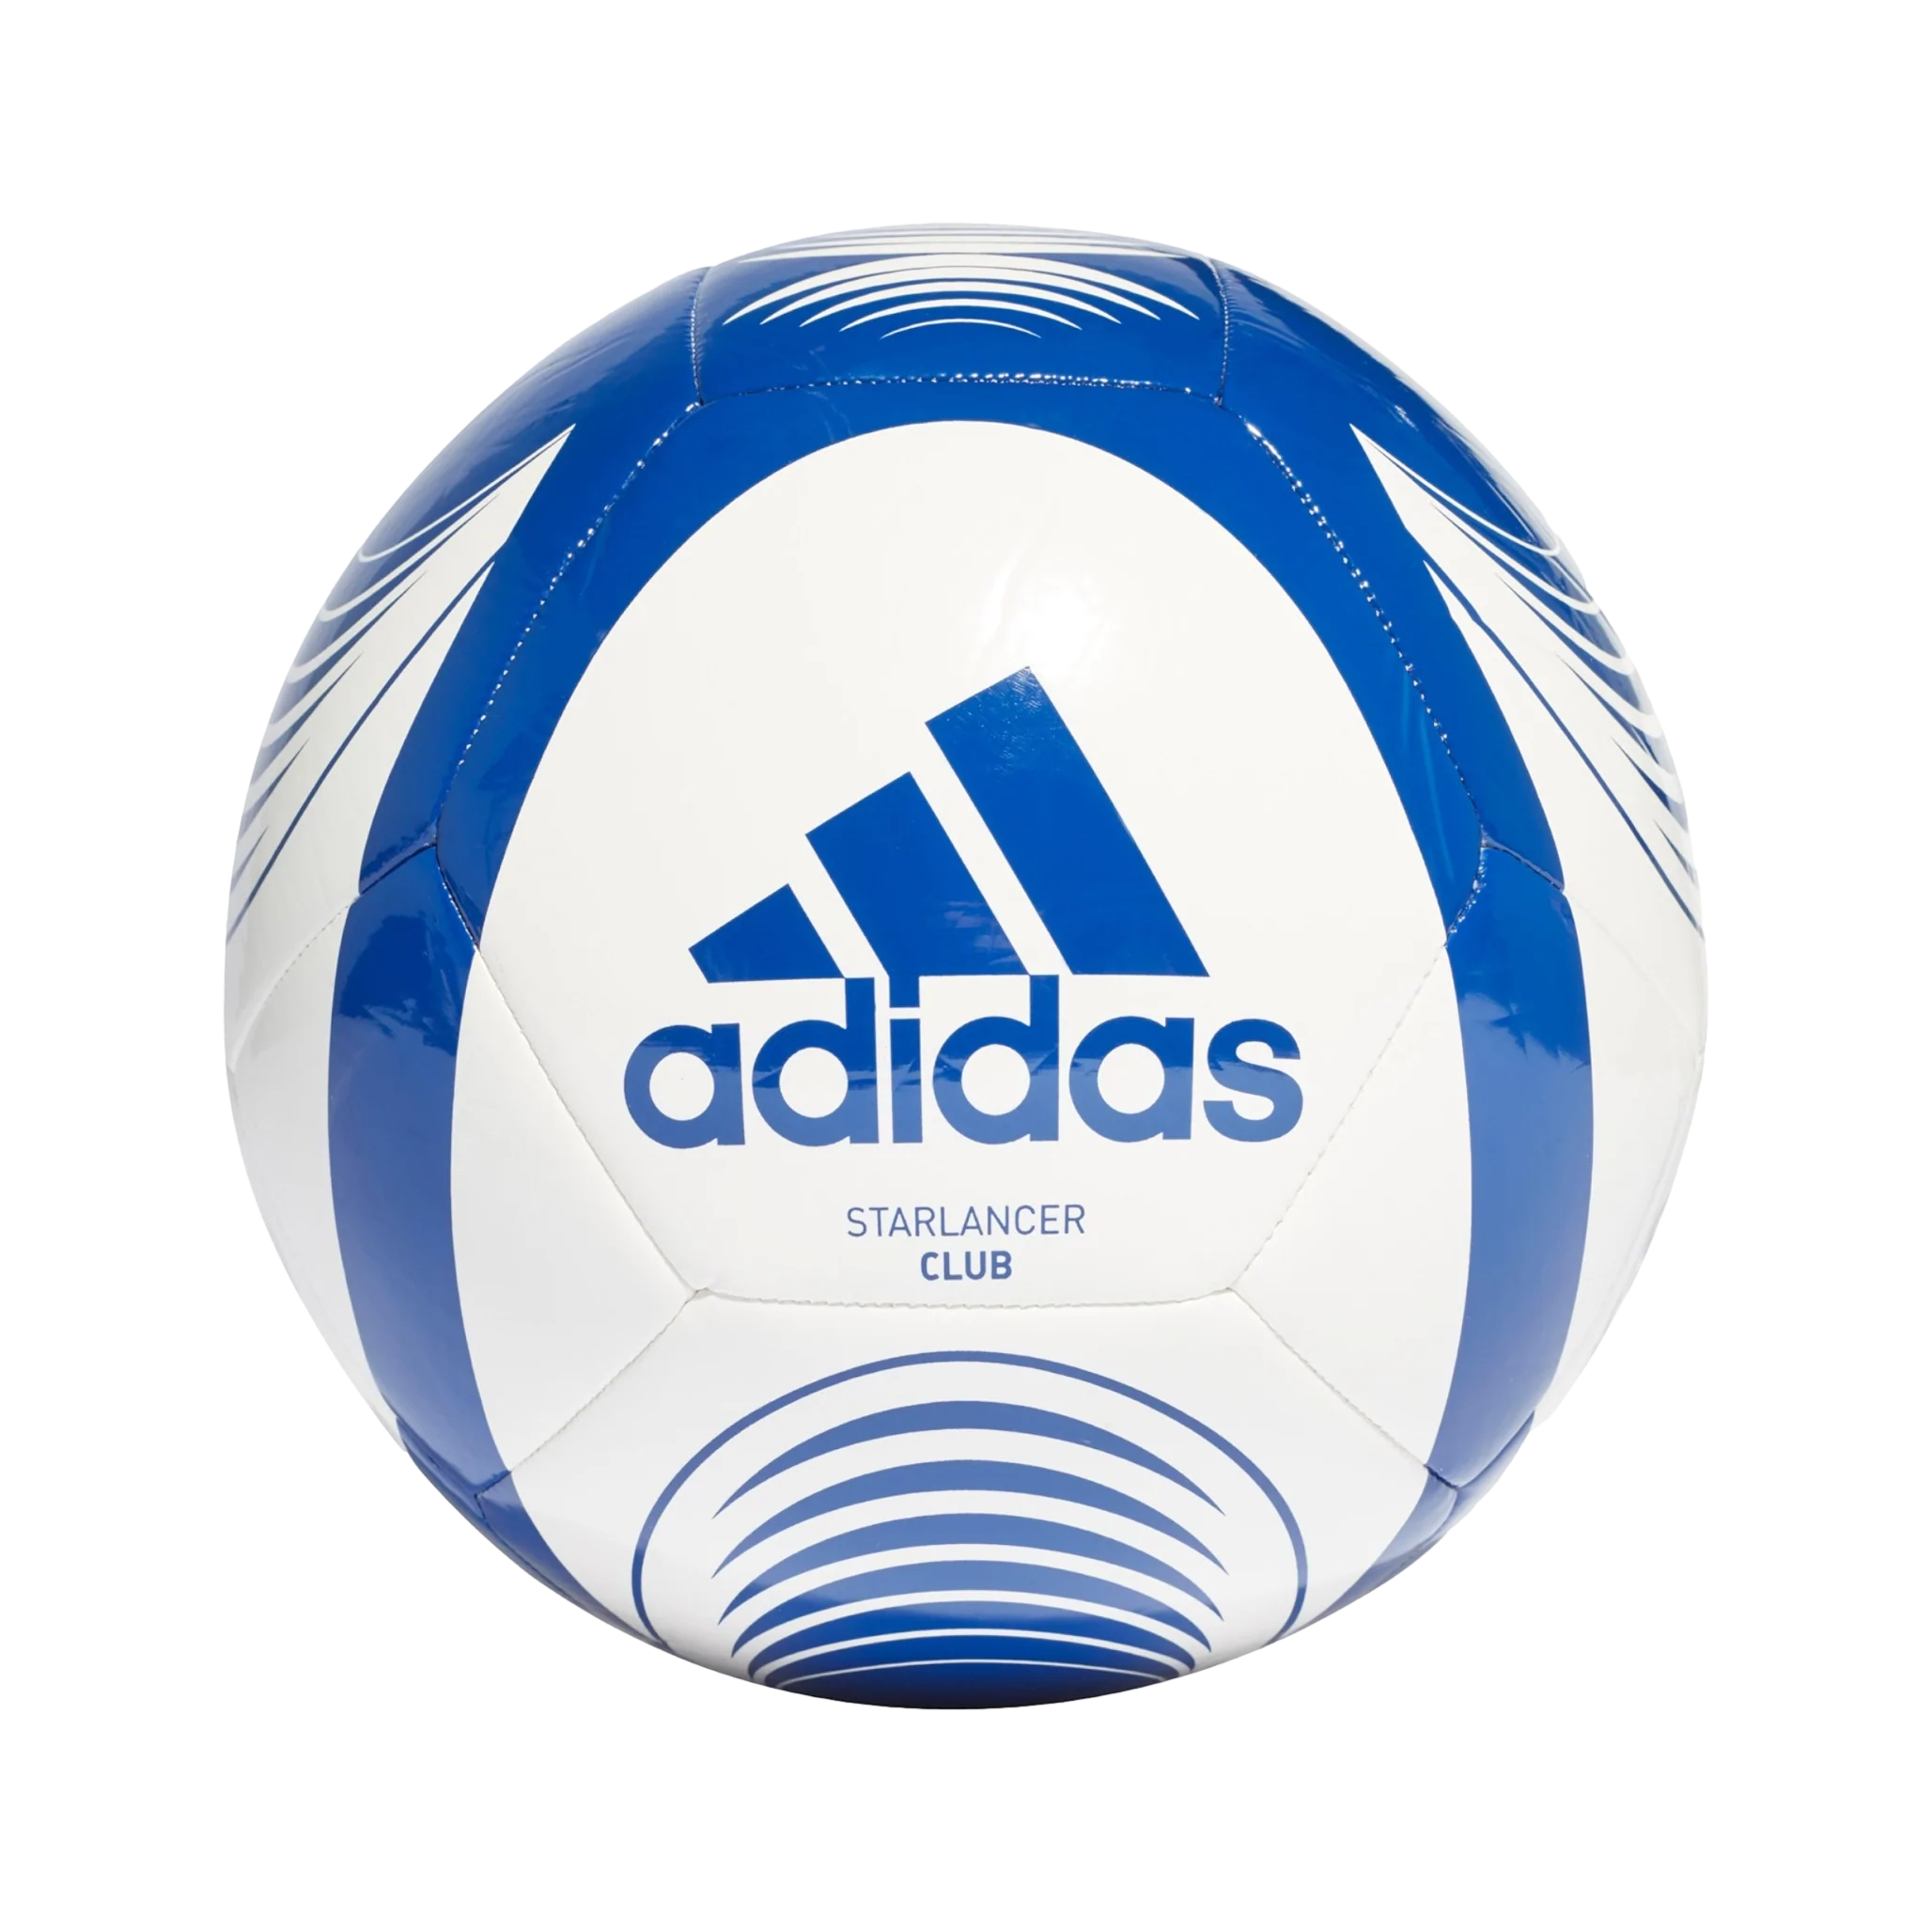 Adidas Starlancer Club Soccer Ball